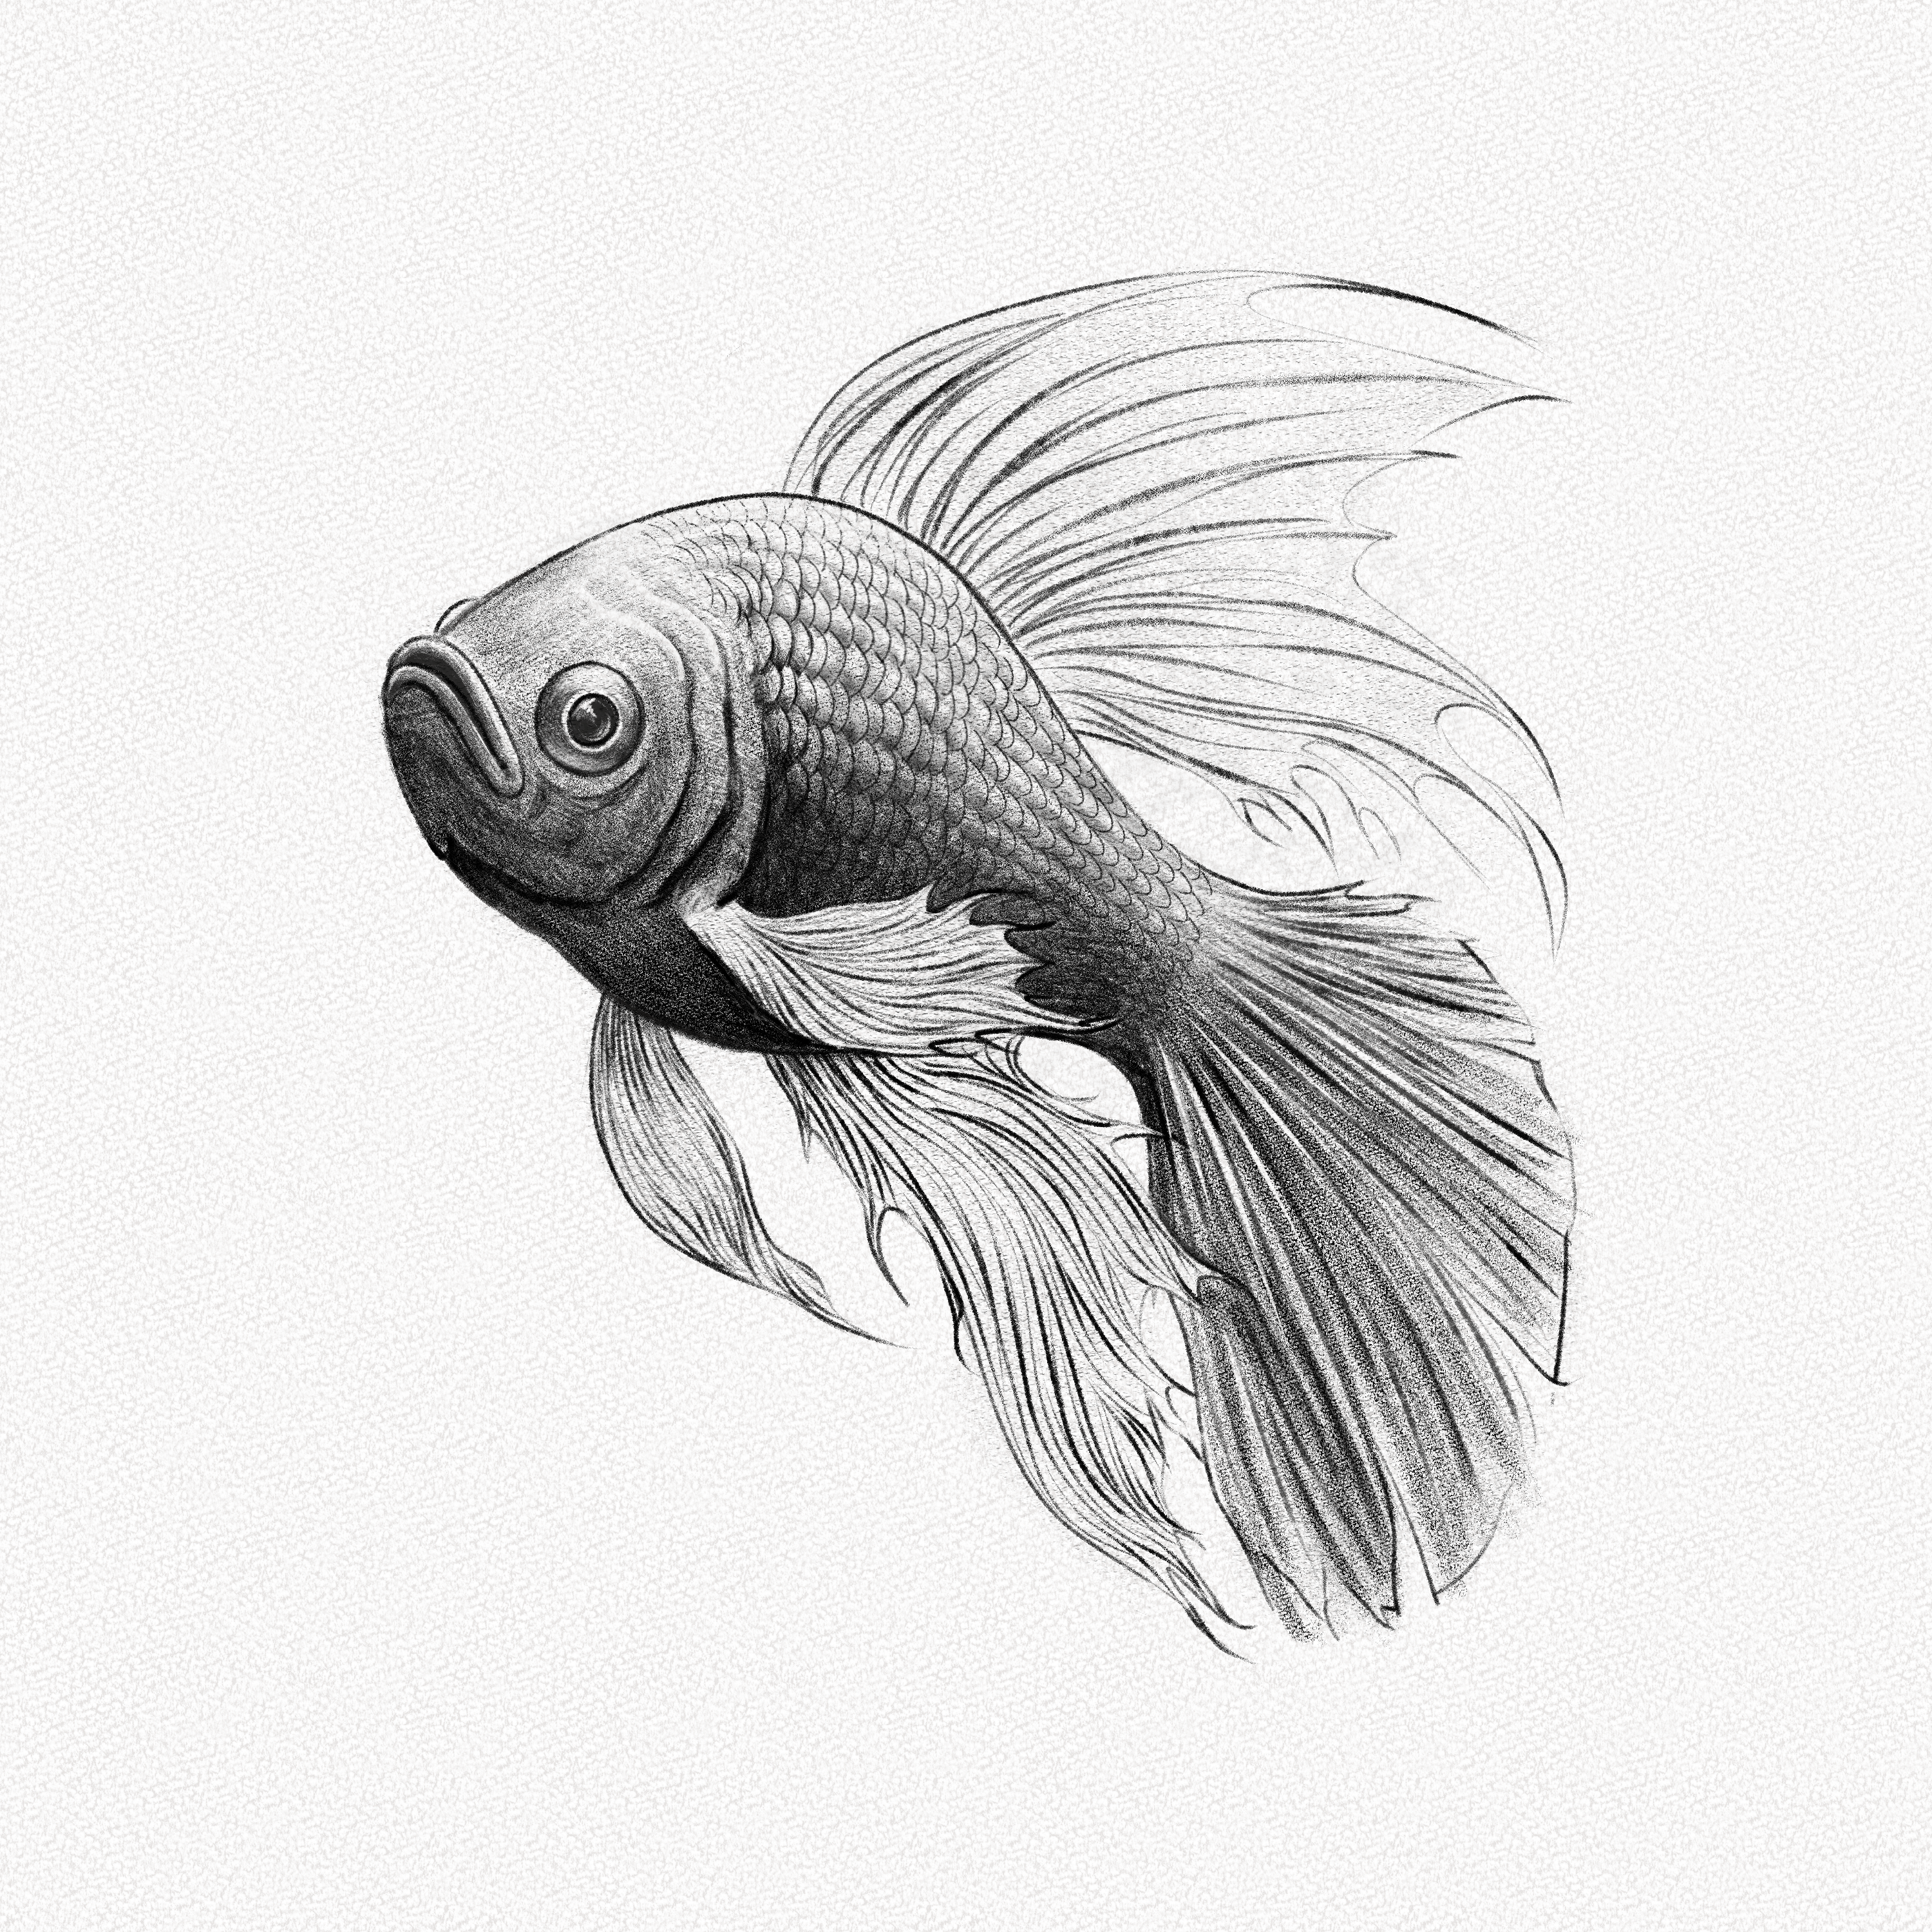 Angler Fish sketch by NickMockoviak on DeviantArt